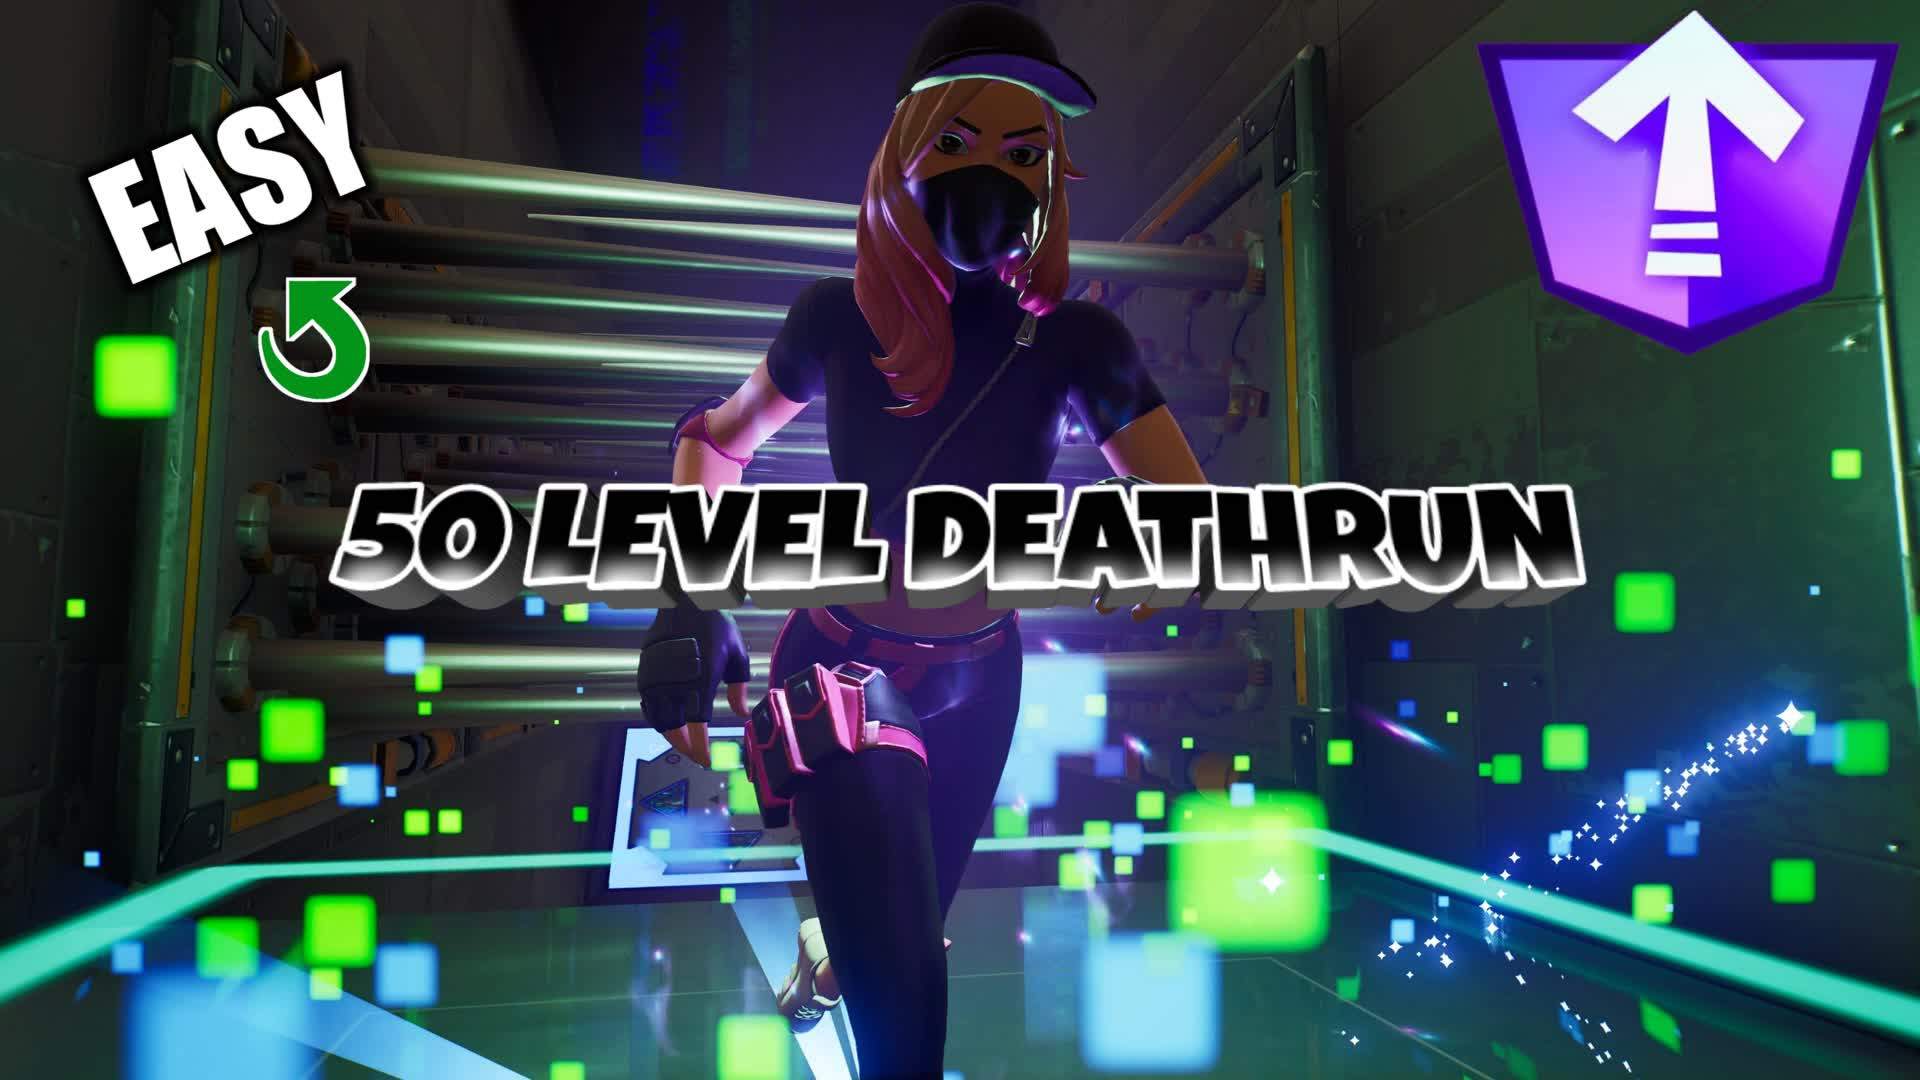 50 Level Deathrun [Easy]